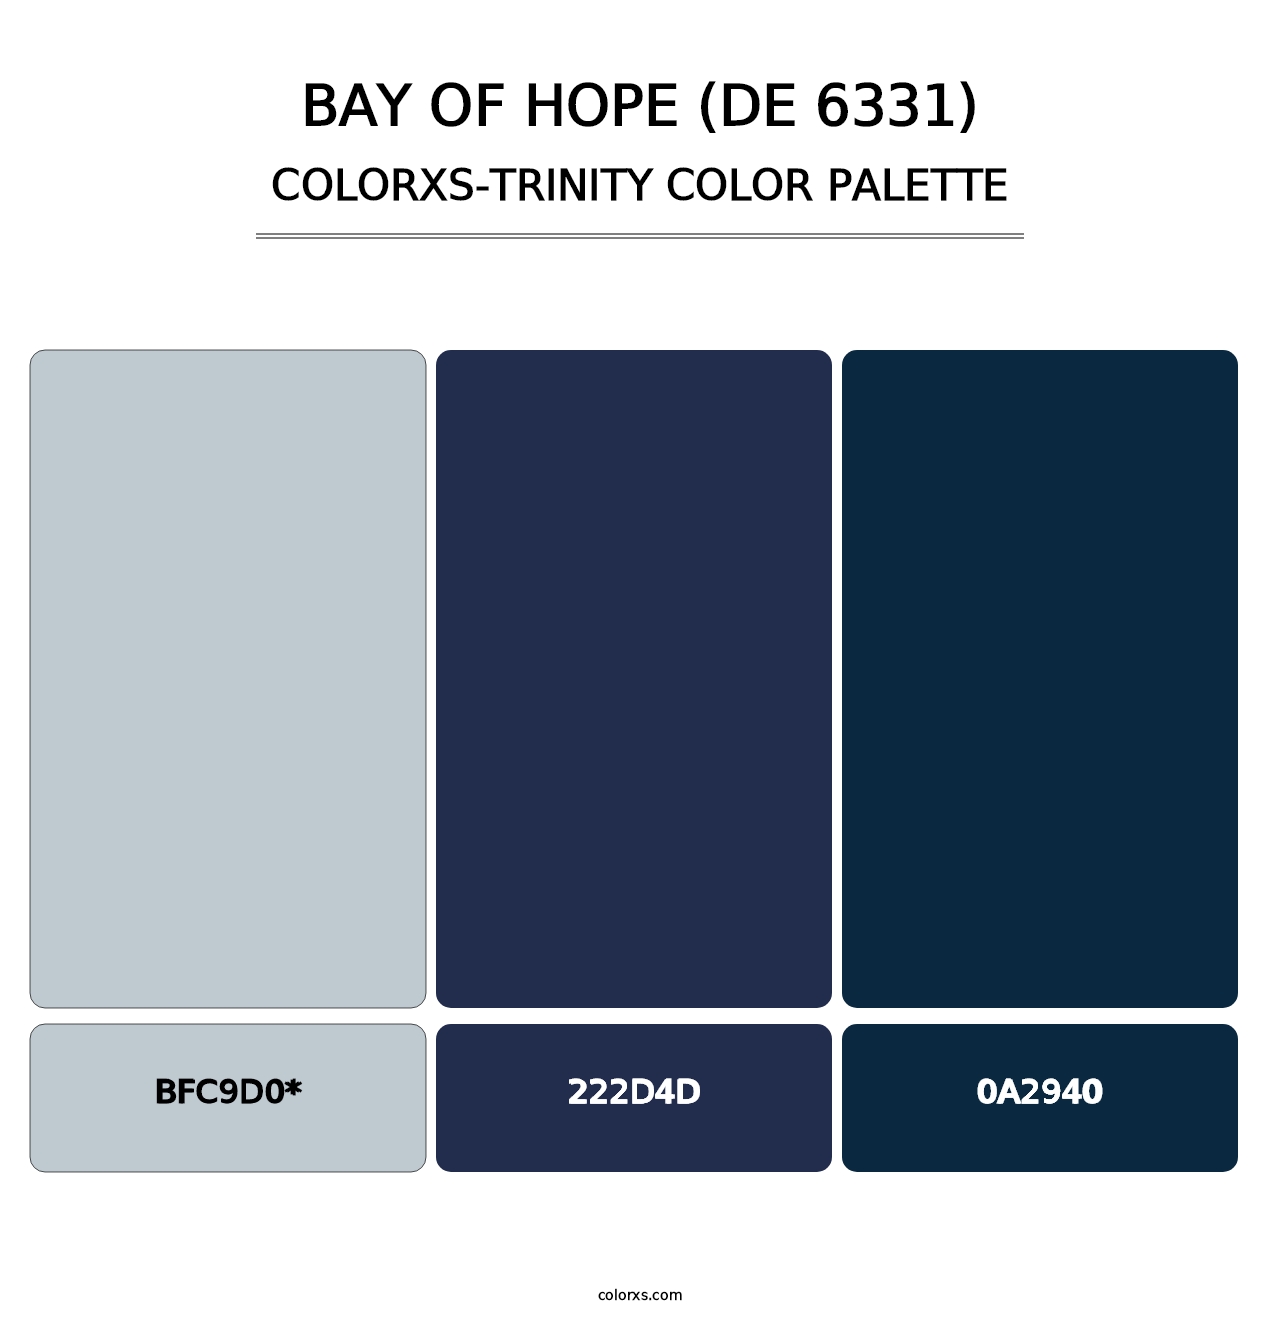 Bay of Hope (DE 6331) - Colorxs Trinity Palette